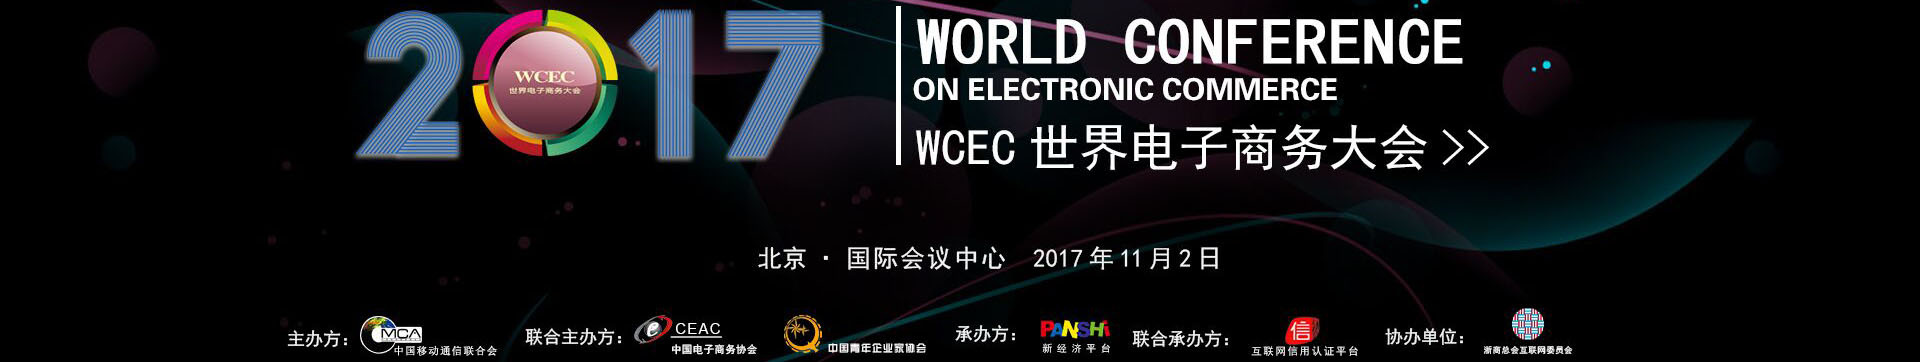 WCEC 2017世界电子商务大会